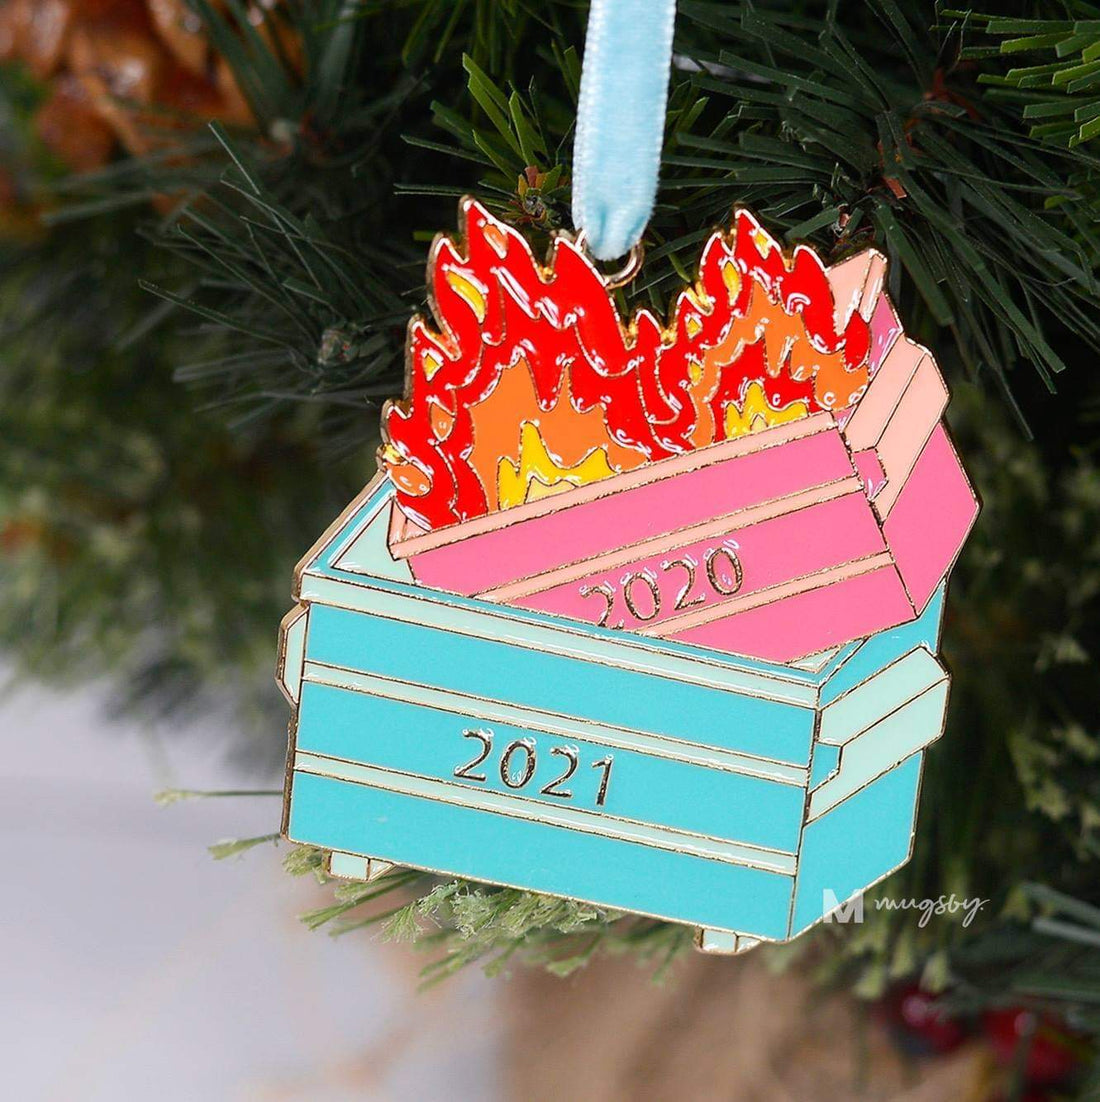 2021 Dumpster Fire Ornament, Christmas Ornament